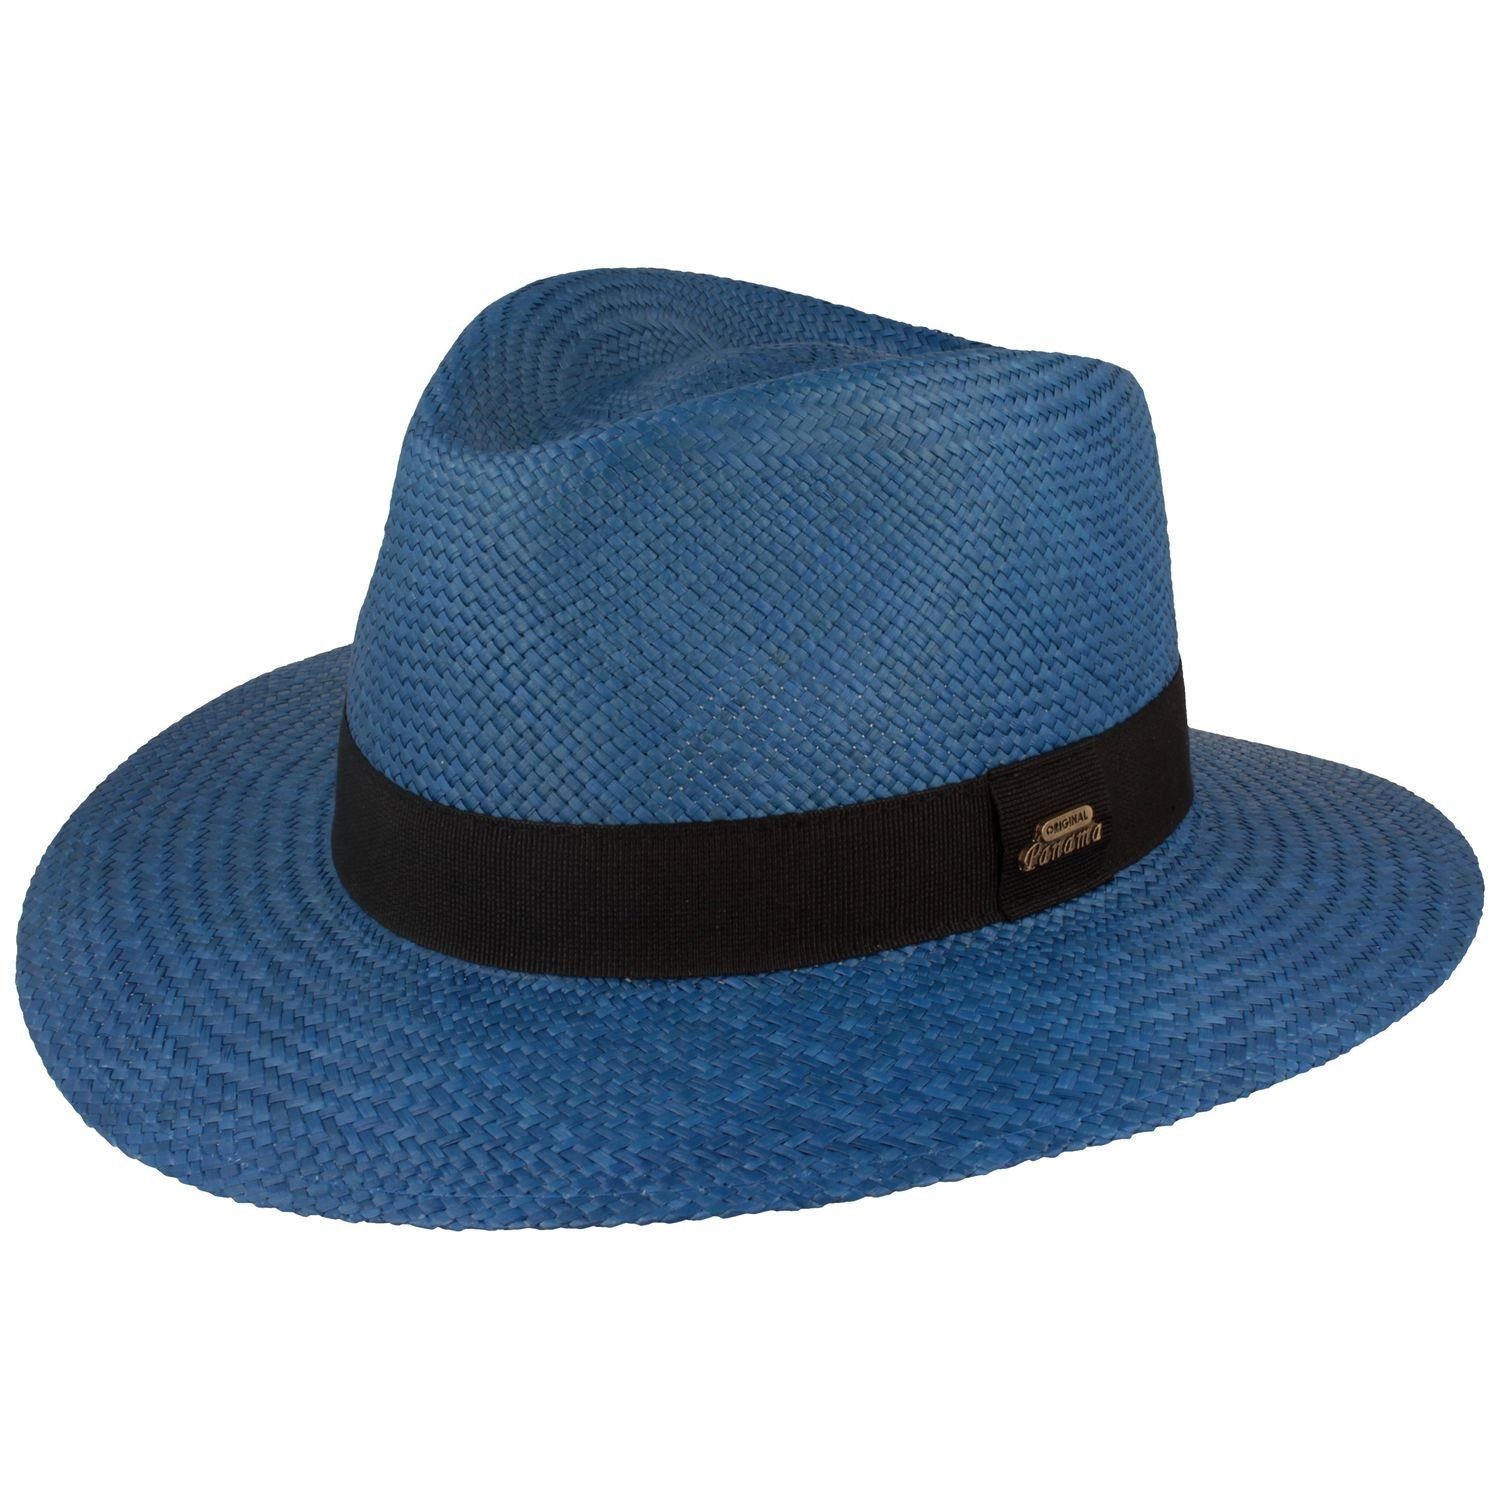 Breiter Strohhut Eleganter original Panama Hut UV-Schutz 50+ blau